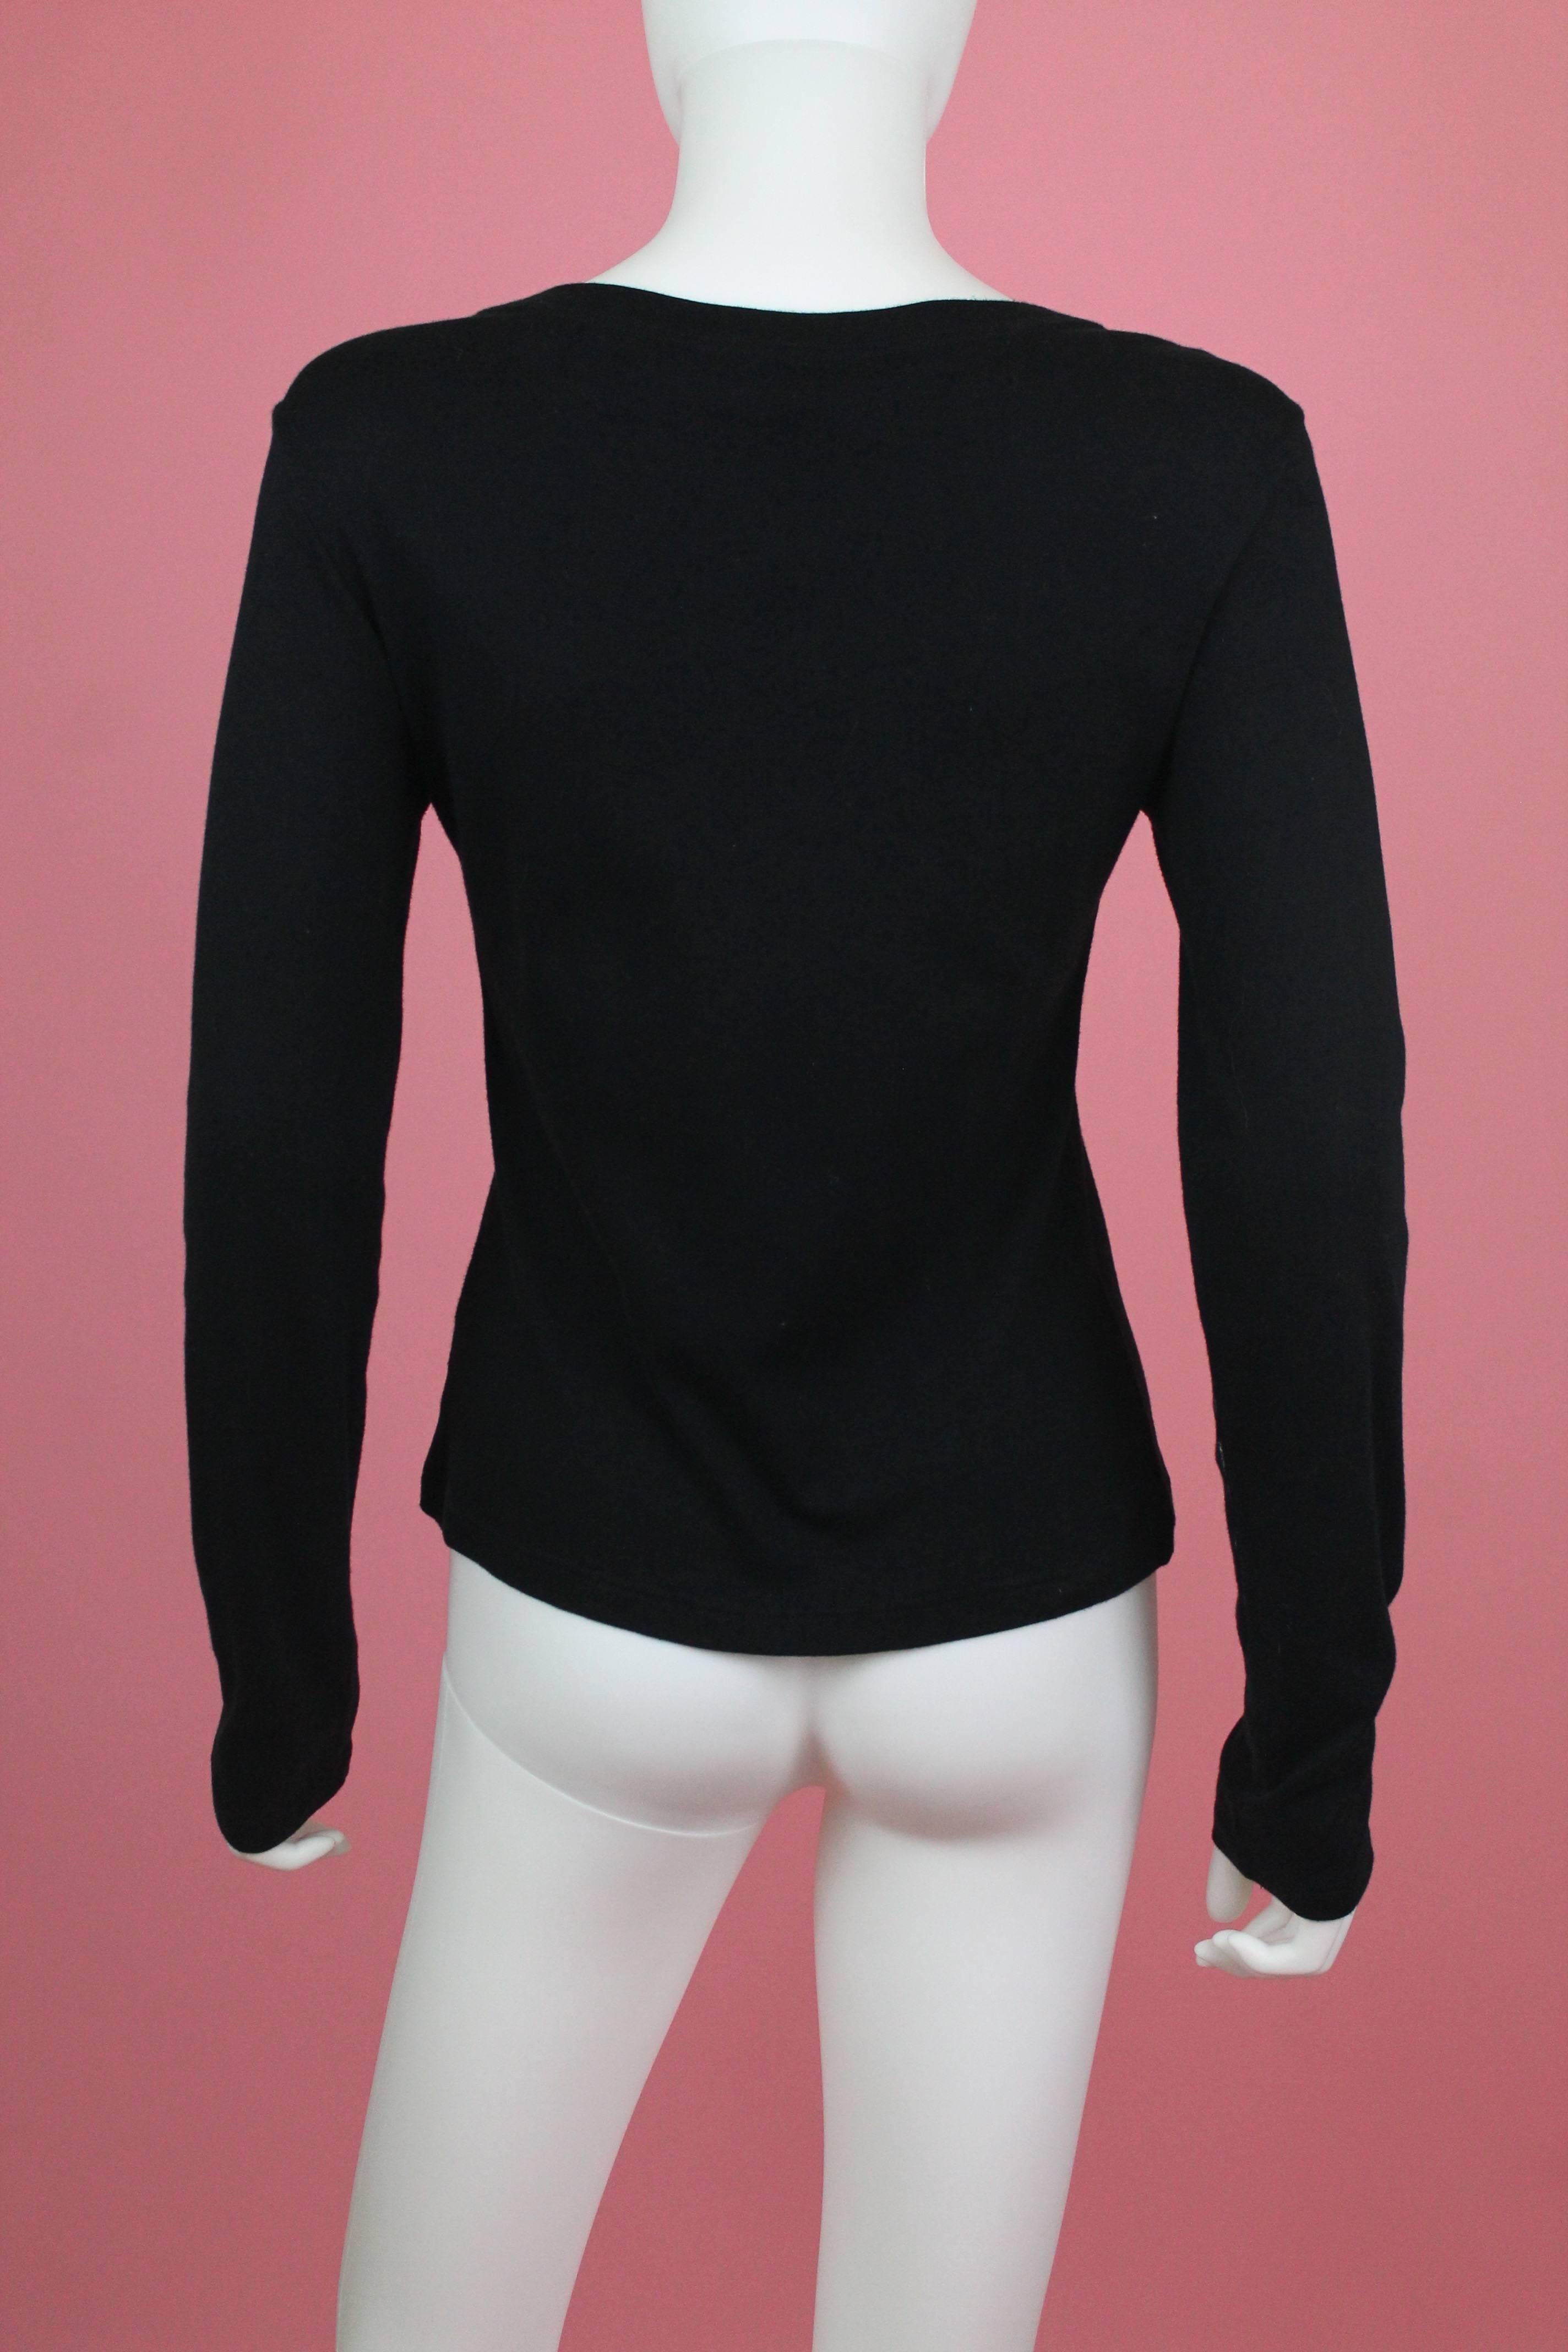 Women's or Men's Christian Dior  Cupid Logo Long Sleeve Black T-Shirt, c. 2000's, Size 8 US